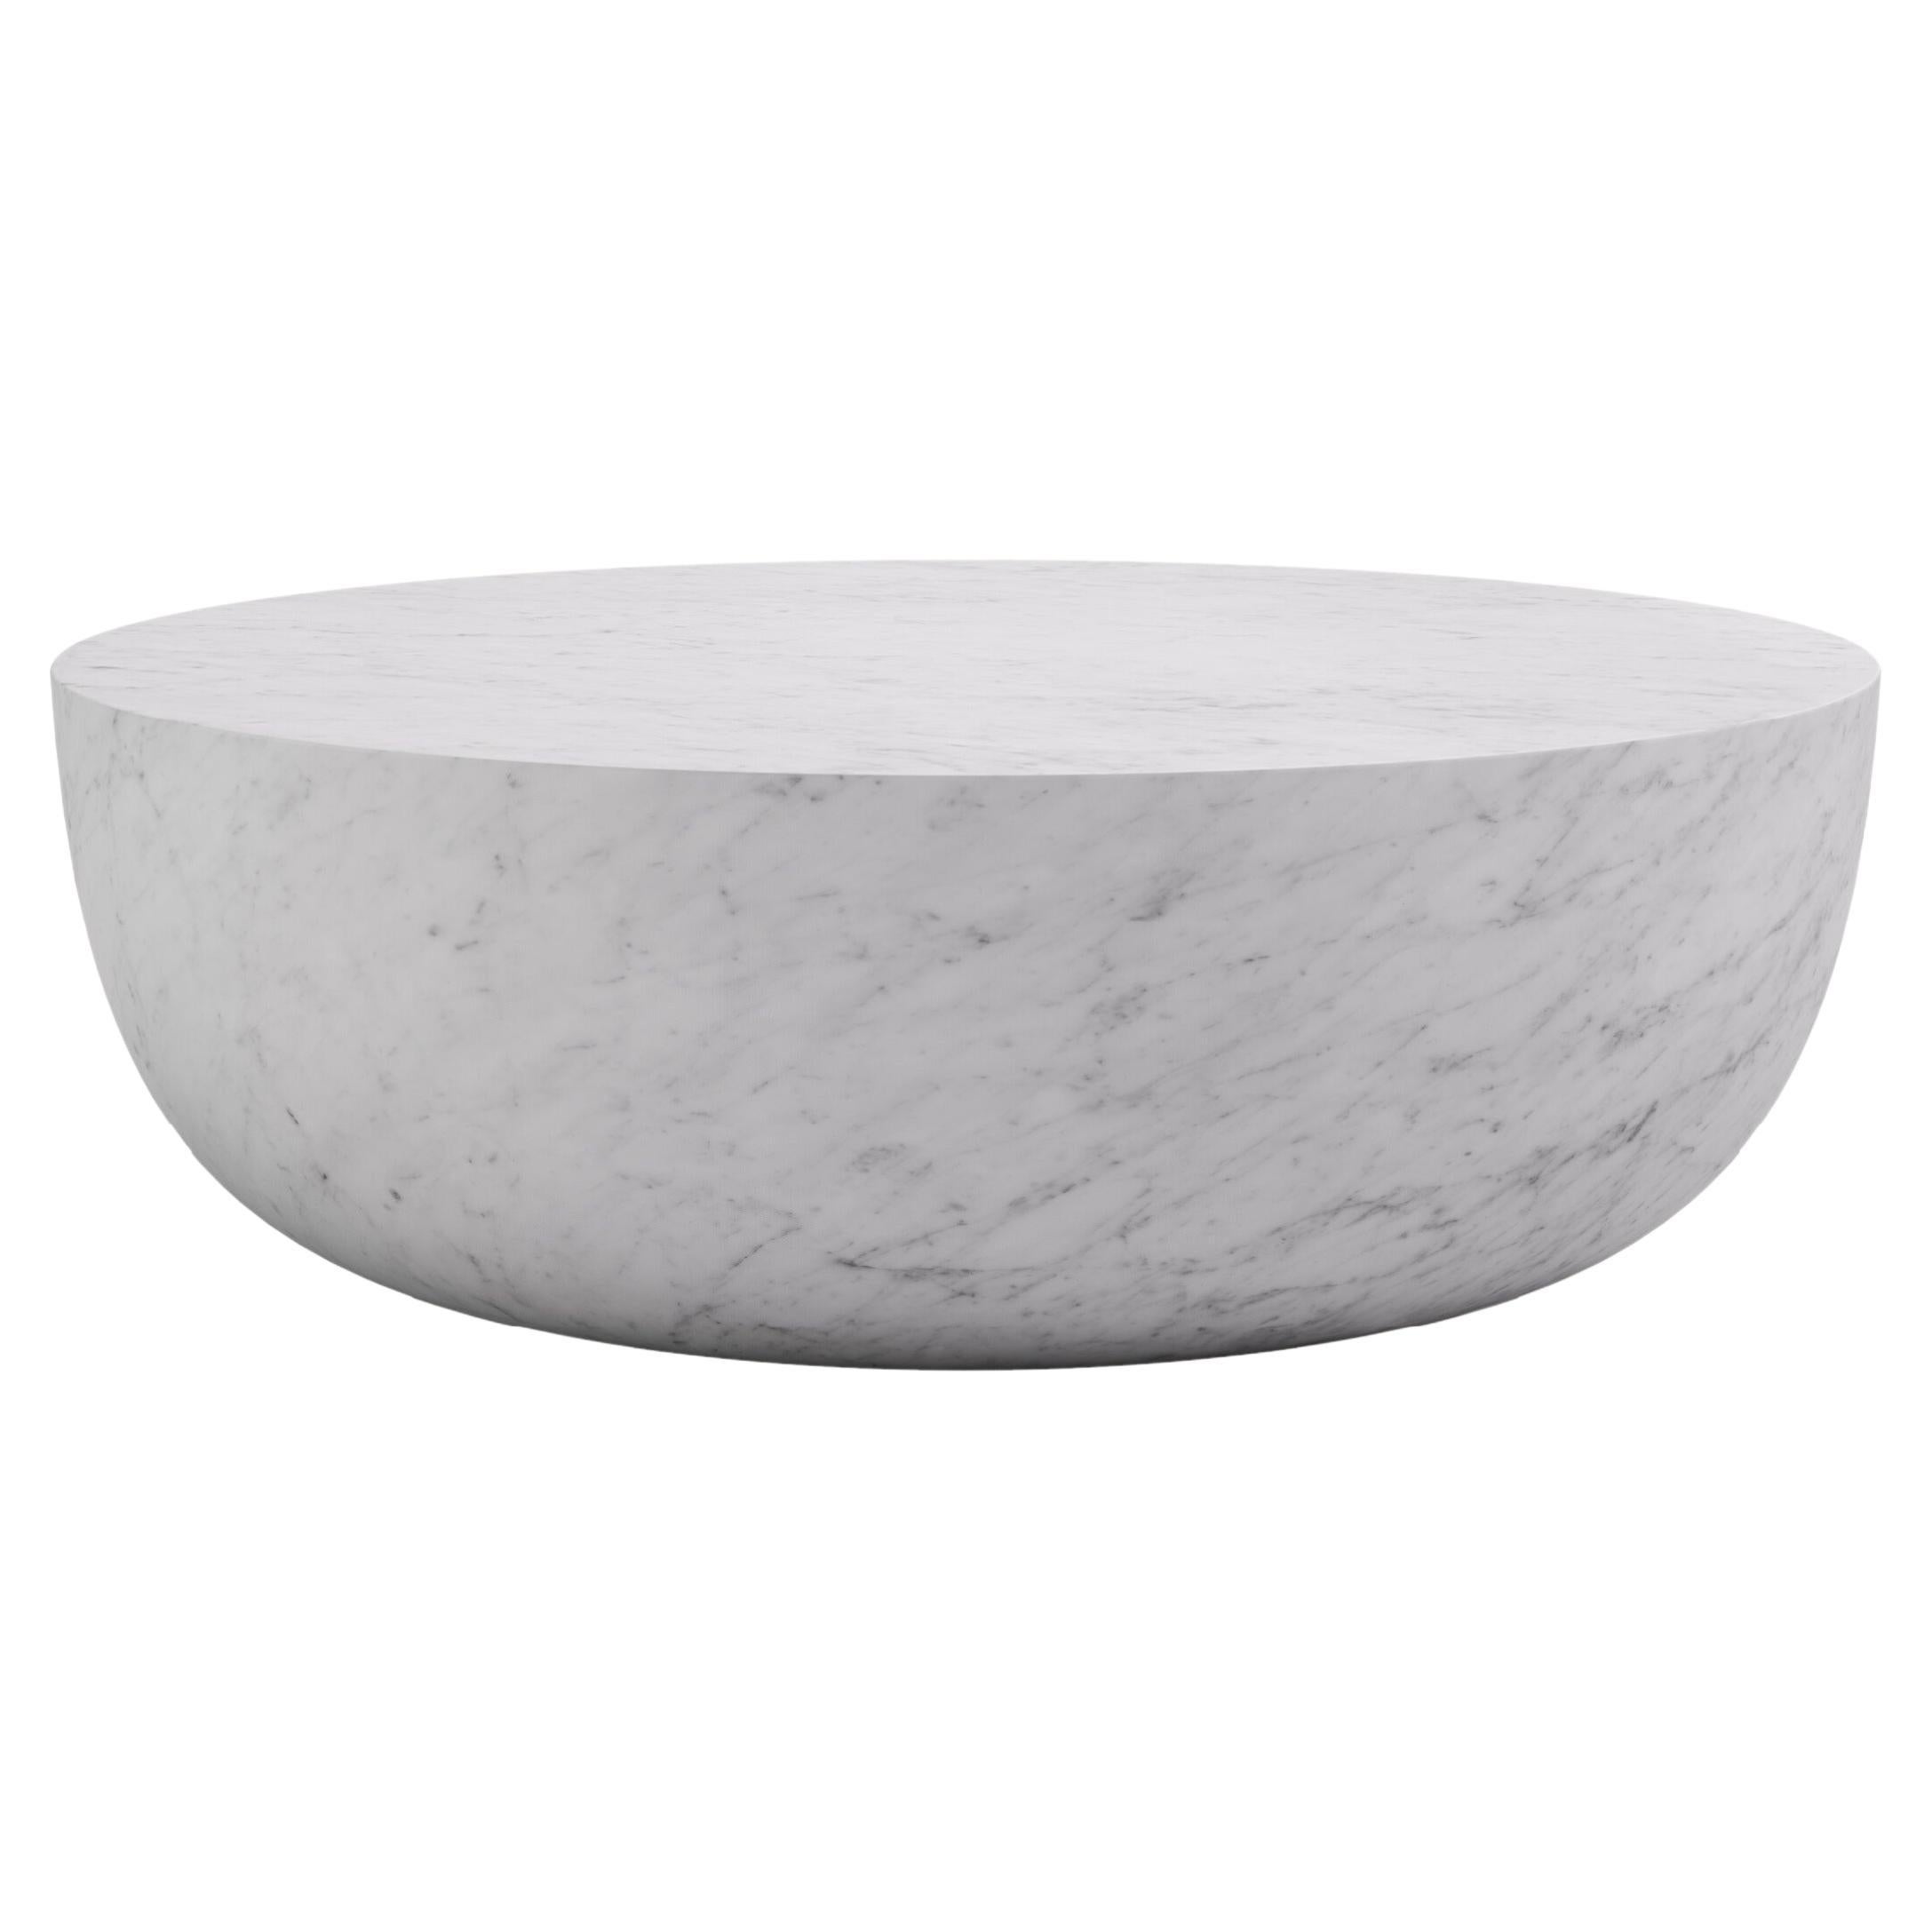 FORM(LA) Sfera Round Coffee Table 48”L x 48”W x 16”H Carrara Bianco Marble For Sale